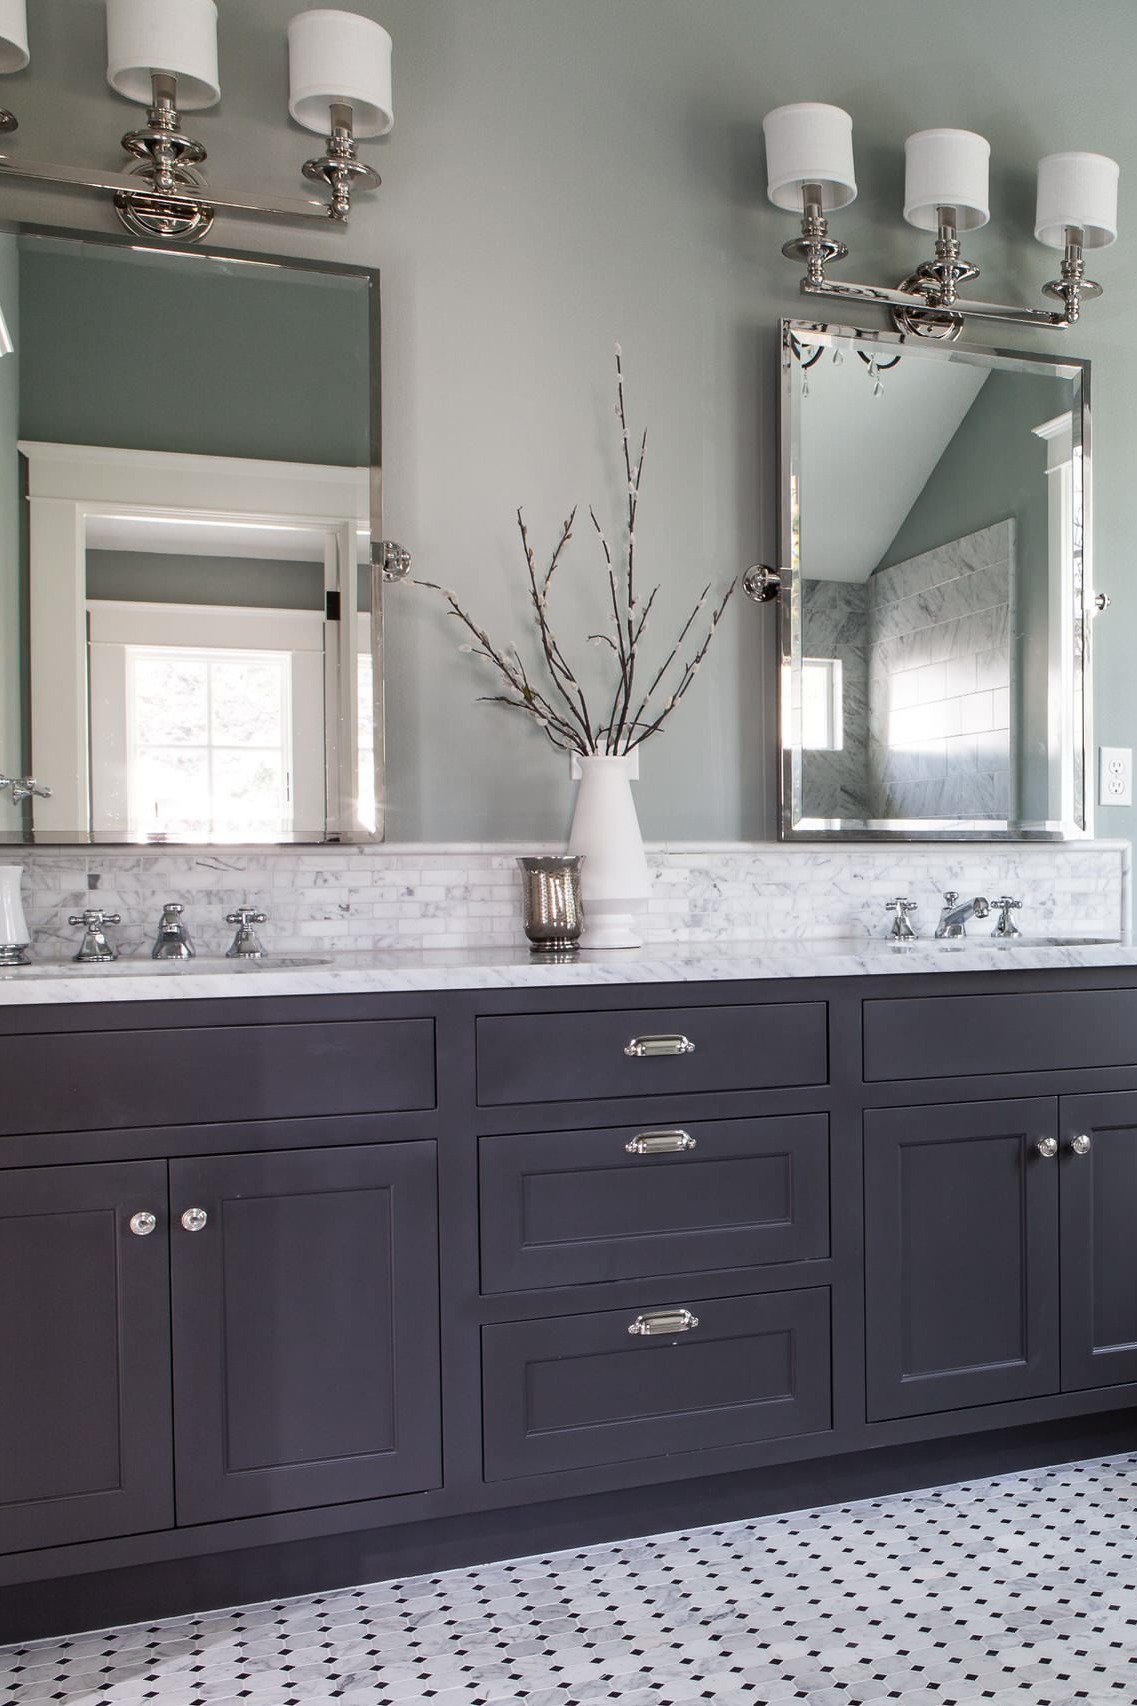 Diamond Style Mosaic Floor Tiles Black Vanity Bathroom Cabinets White Carrara Marble Countertop